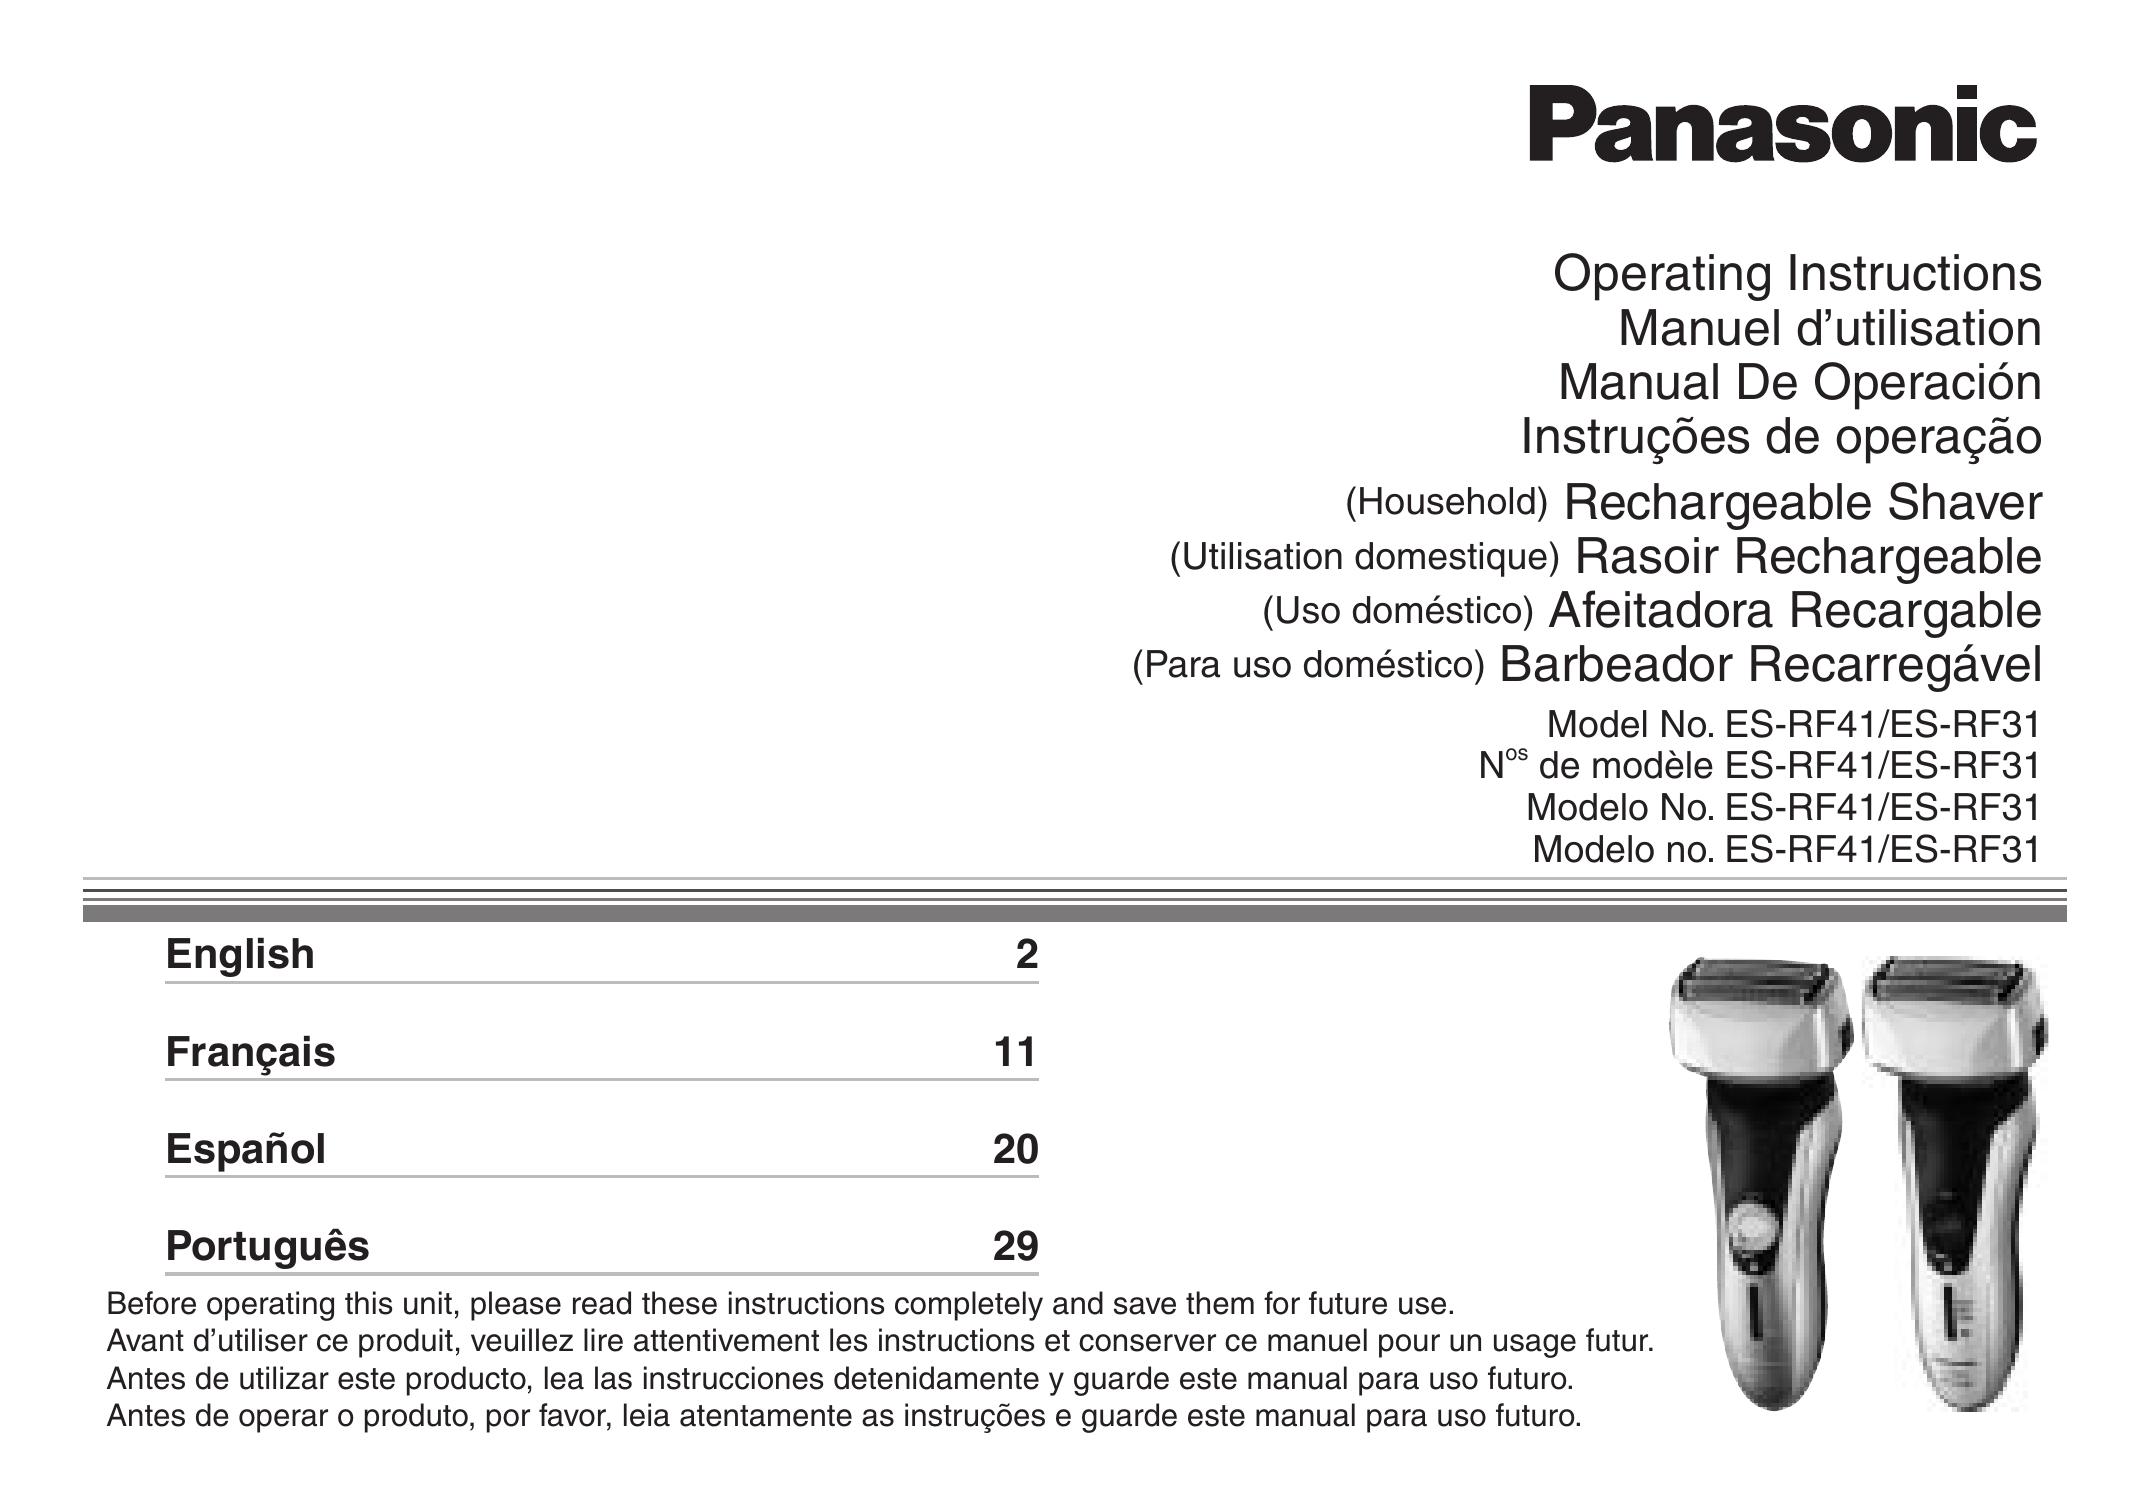 Panasonic ES-RF41/ES-RF31 Electric Shaver User Manual